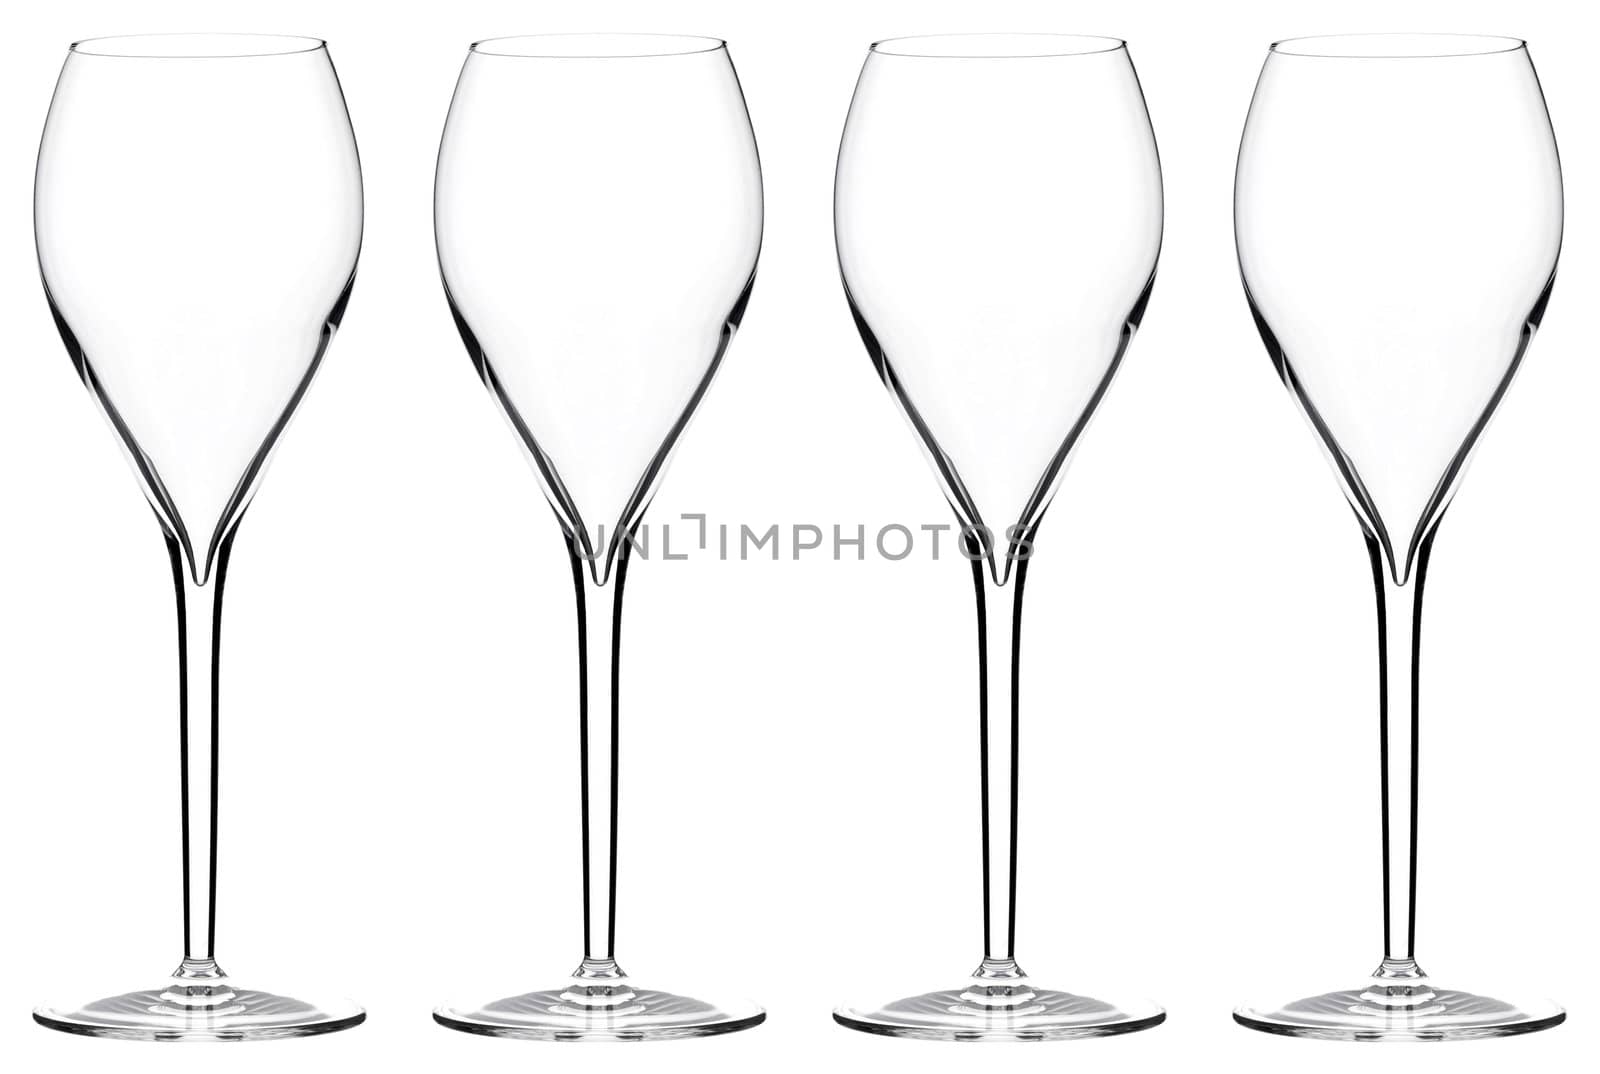 wine glasses by mereutaandrei